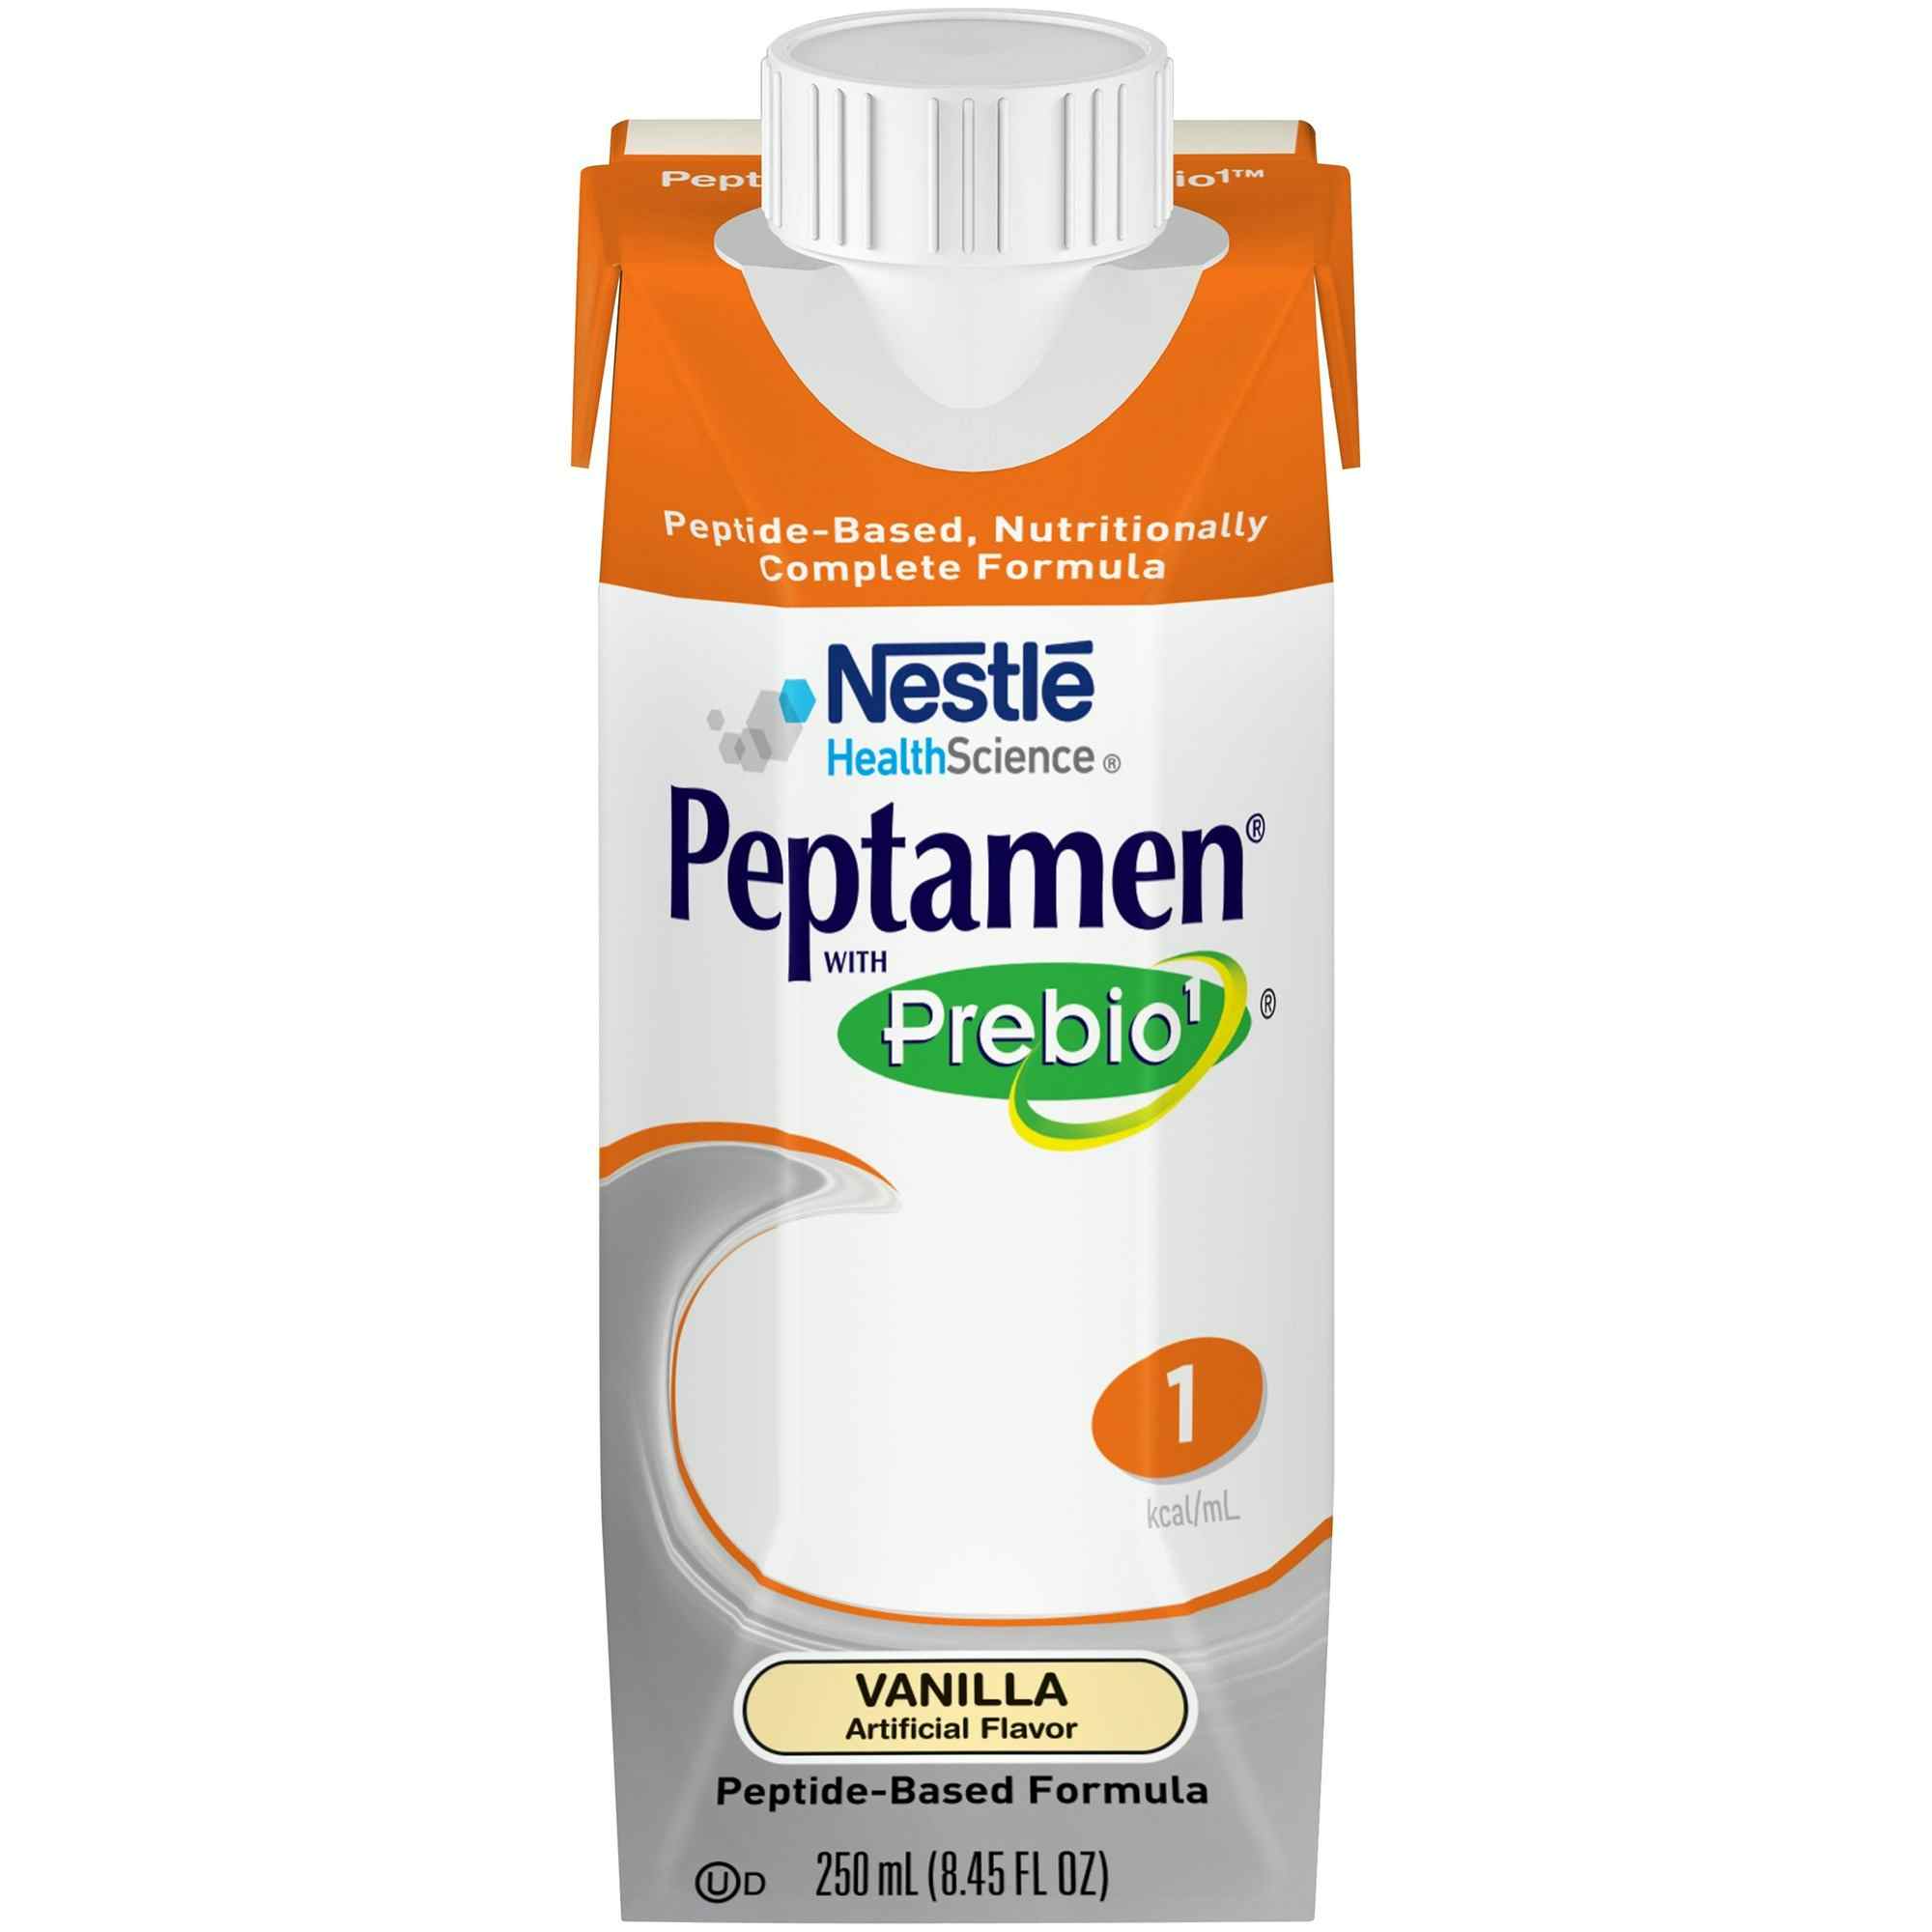 Nestle HealthScience Peptamen with Prebio 1 Peptide-Based Calorically Dense Complete Nutrition Tube Feeding Formula, Vanilla, 250 mL, 10798716181850, 1 Each